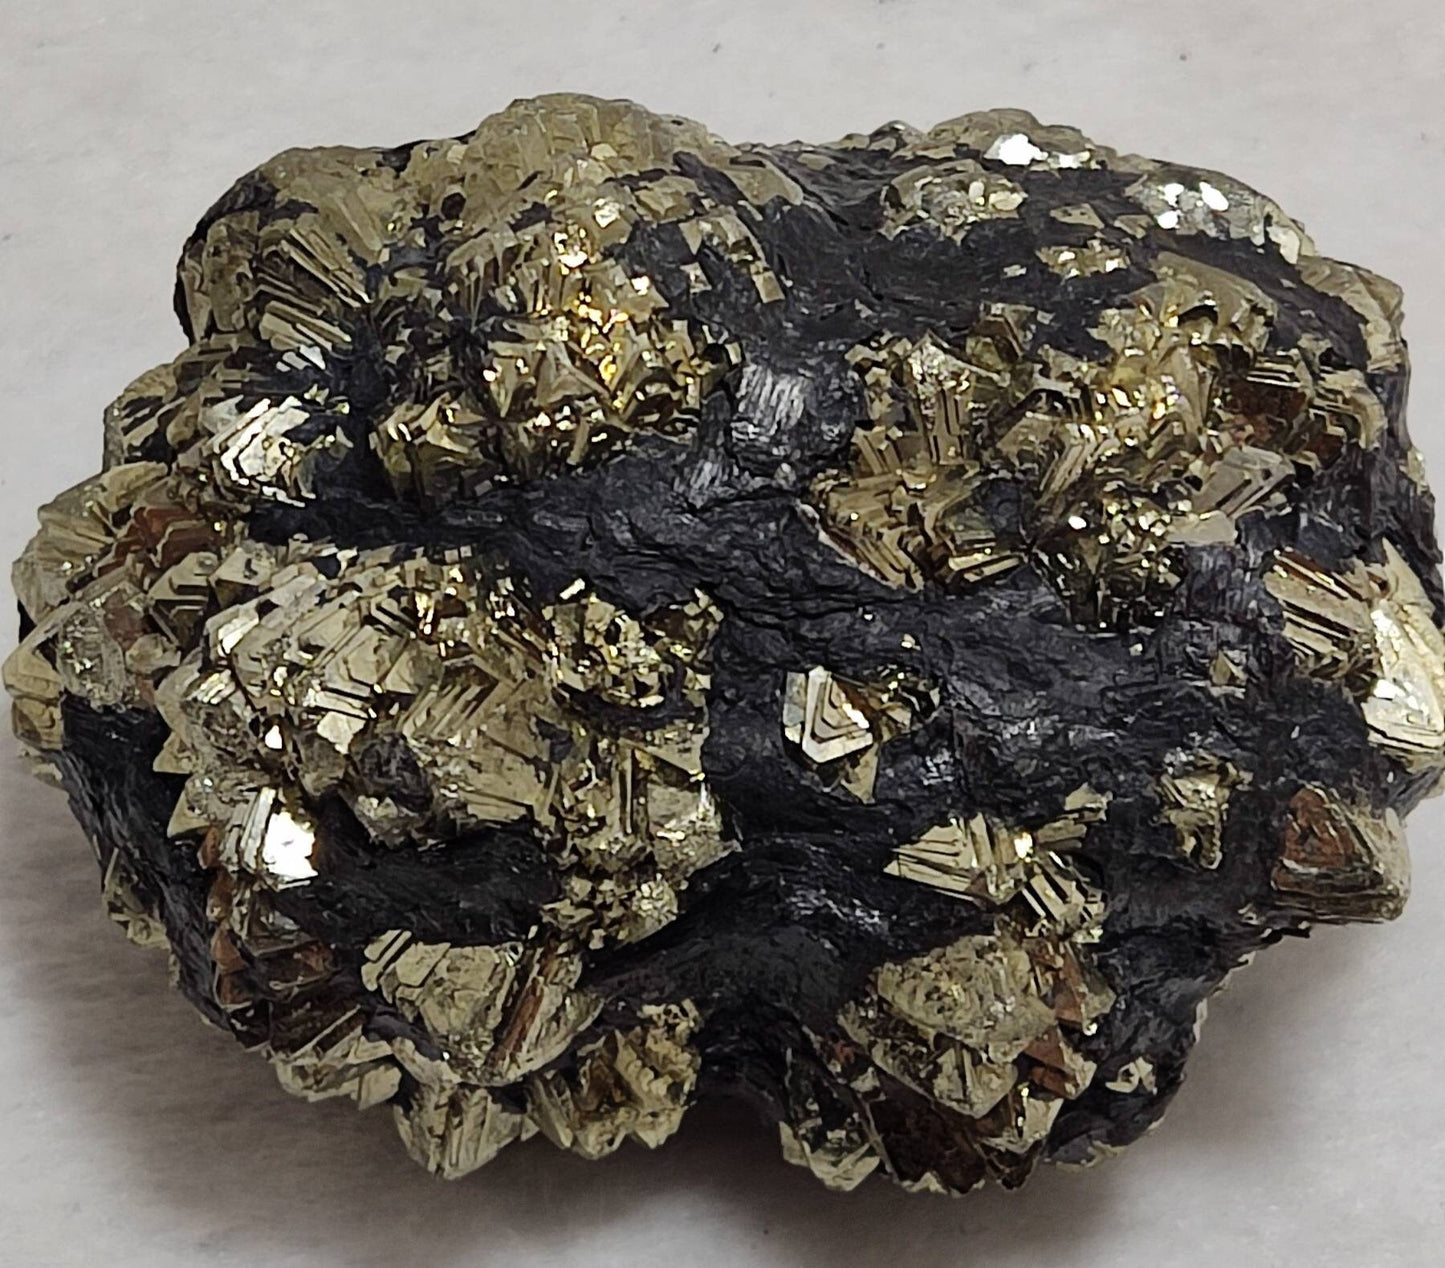 An amazing specimen of pyrite/marcasite 231 grams